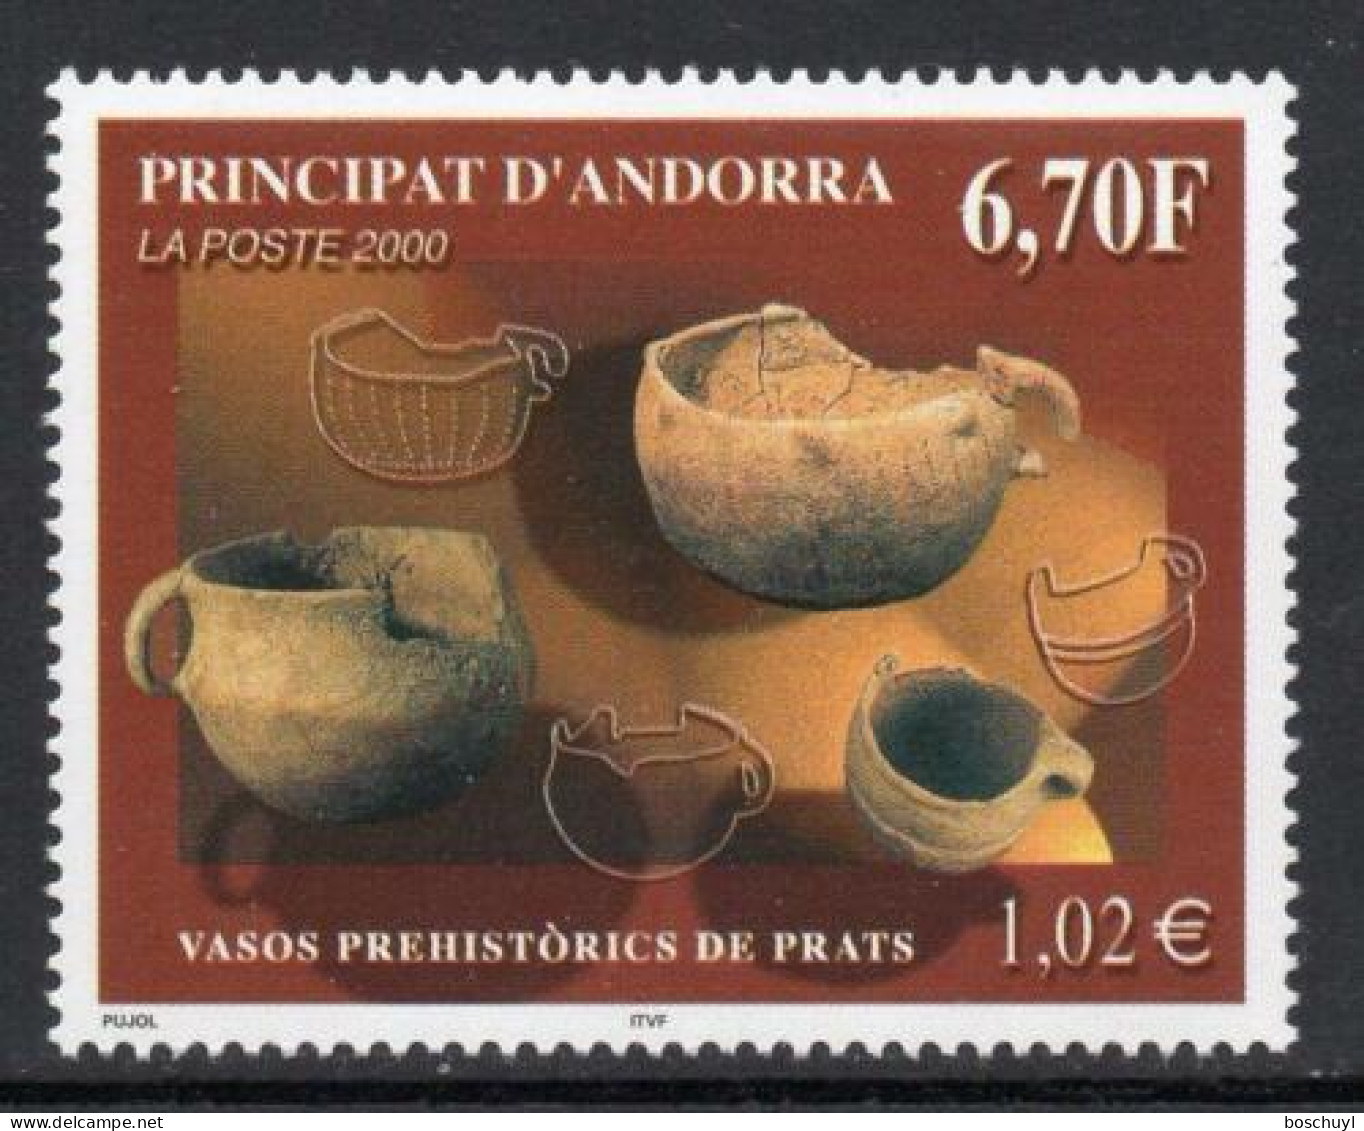 Andorra, French, 2000, Prehistoric Pottery, Ceramics, Archaeology, MNH, Michel 559 - Ongebruikt